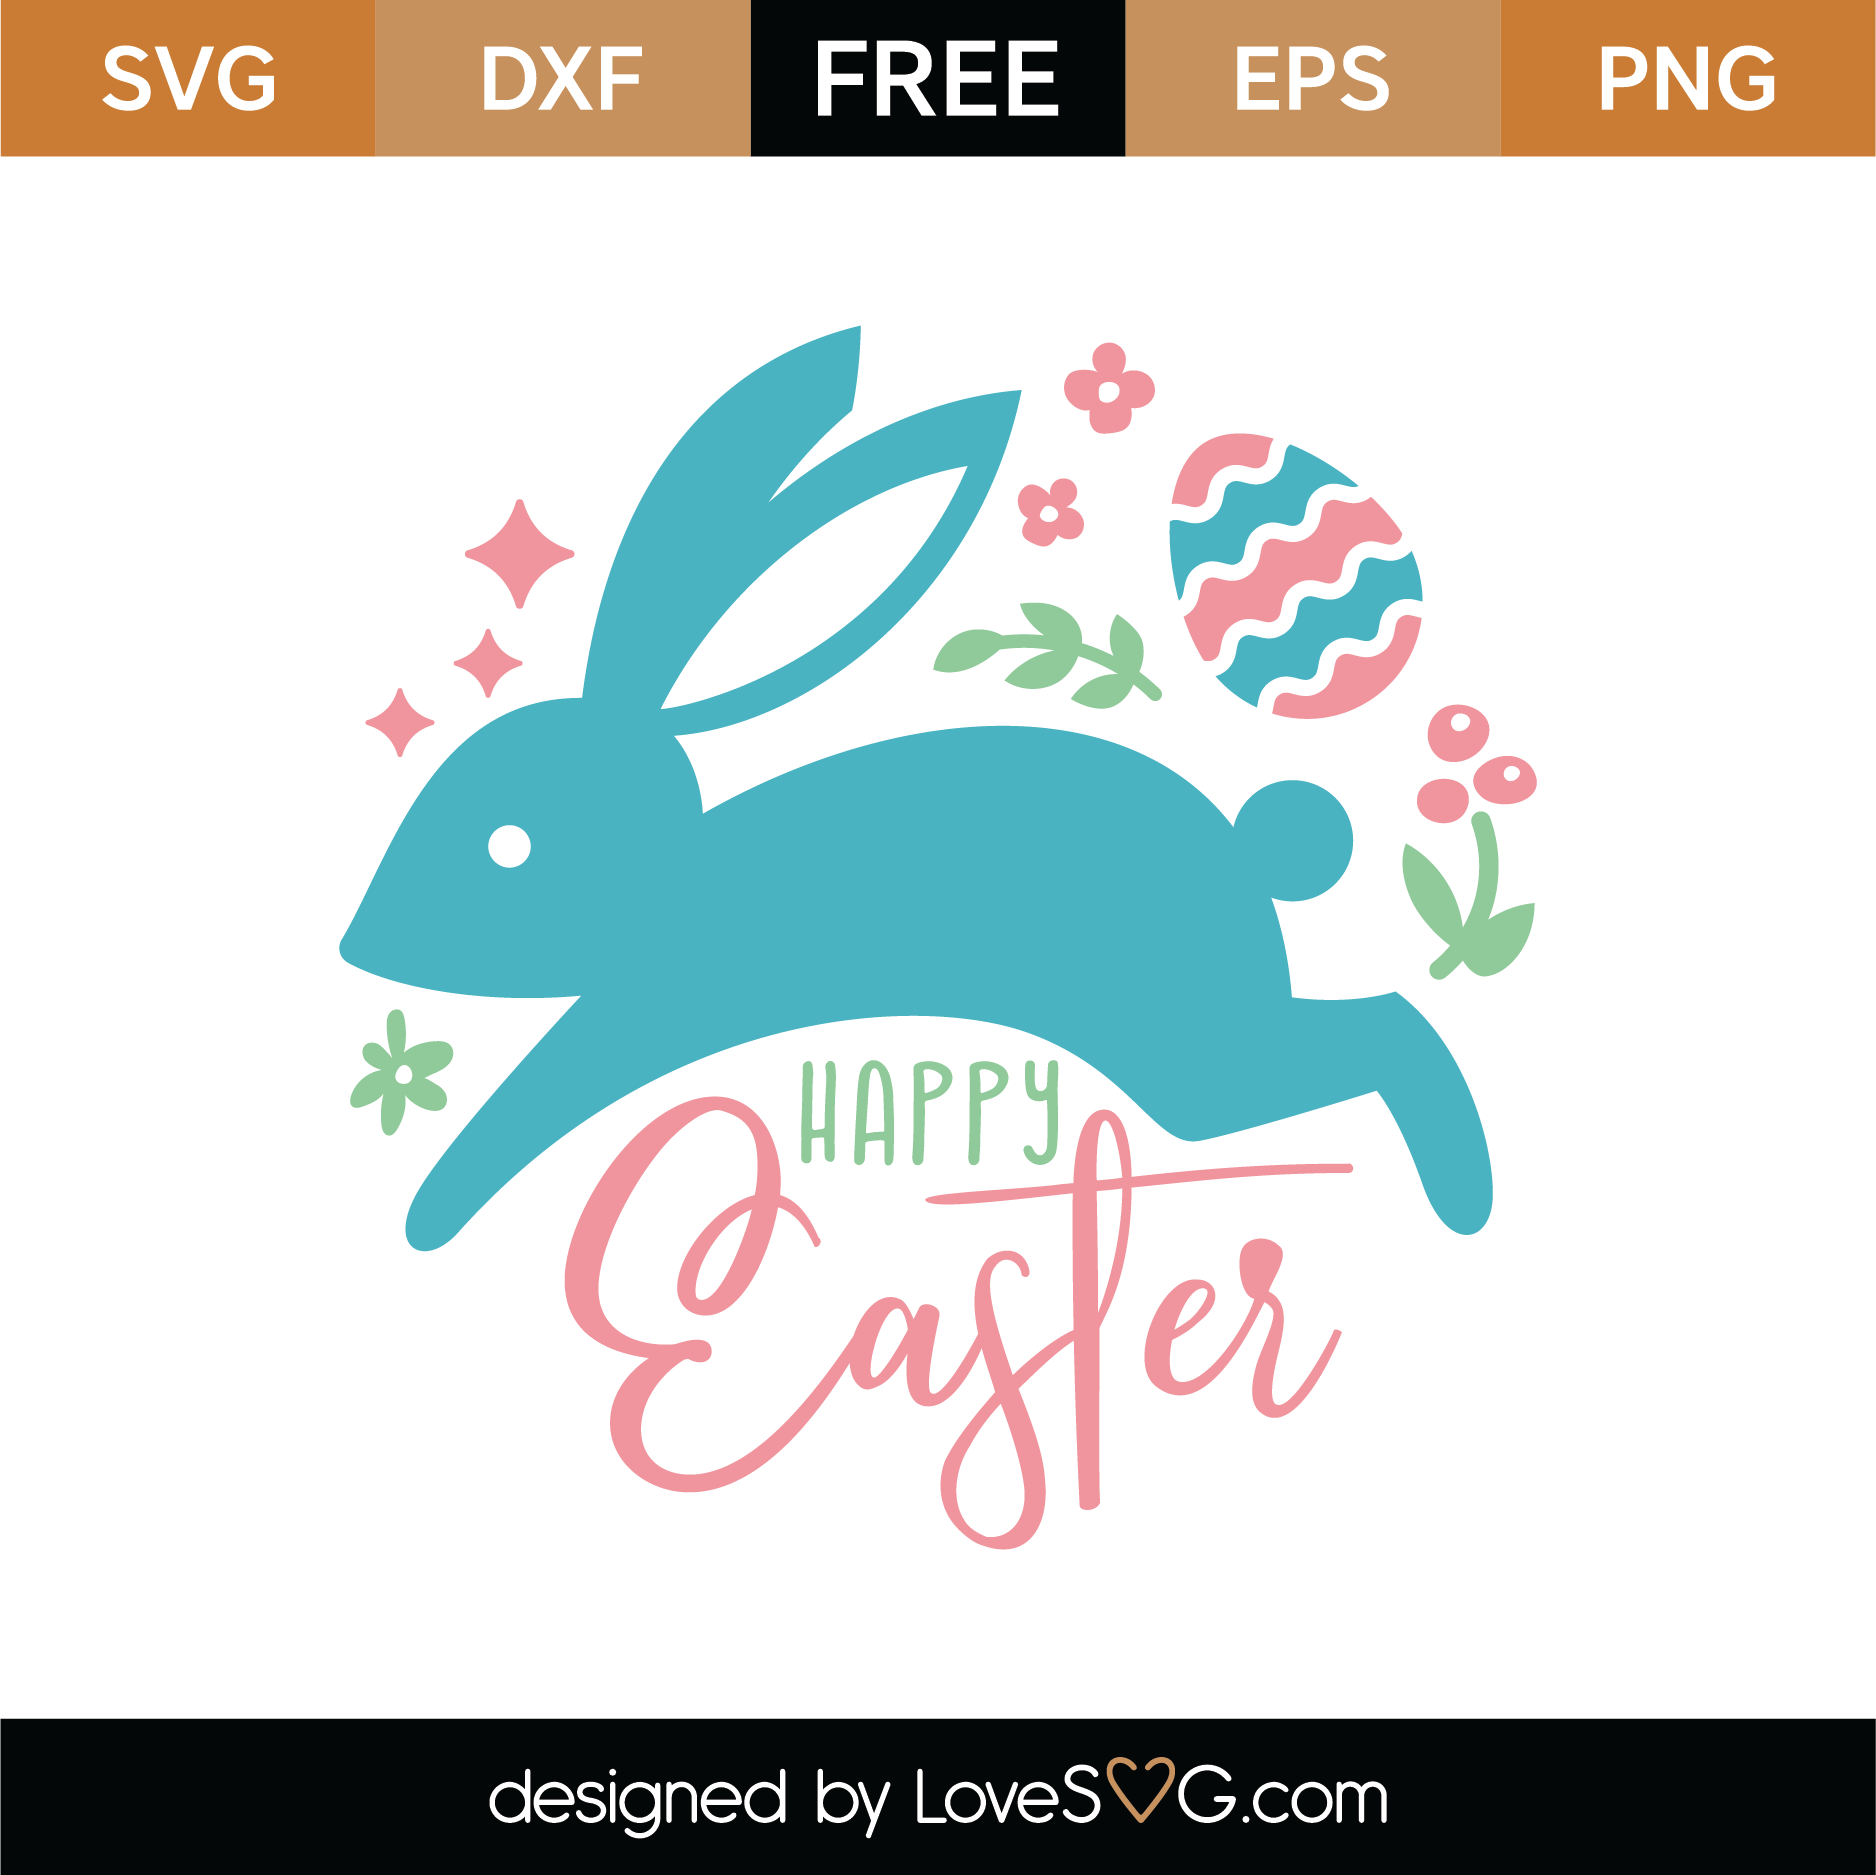 Download Free Hoppy Easter SVG Cut File | Lovesvg.com